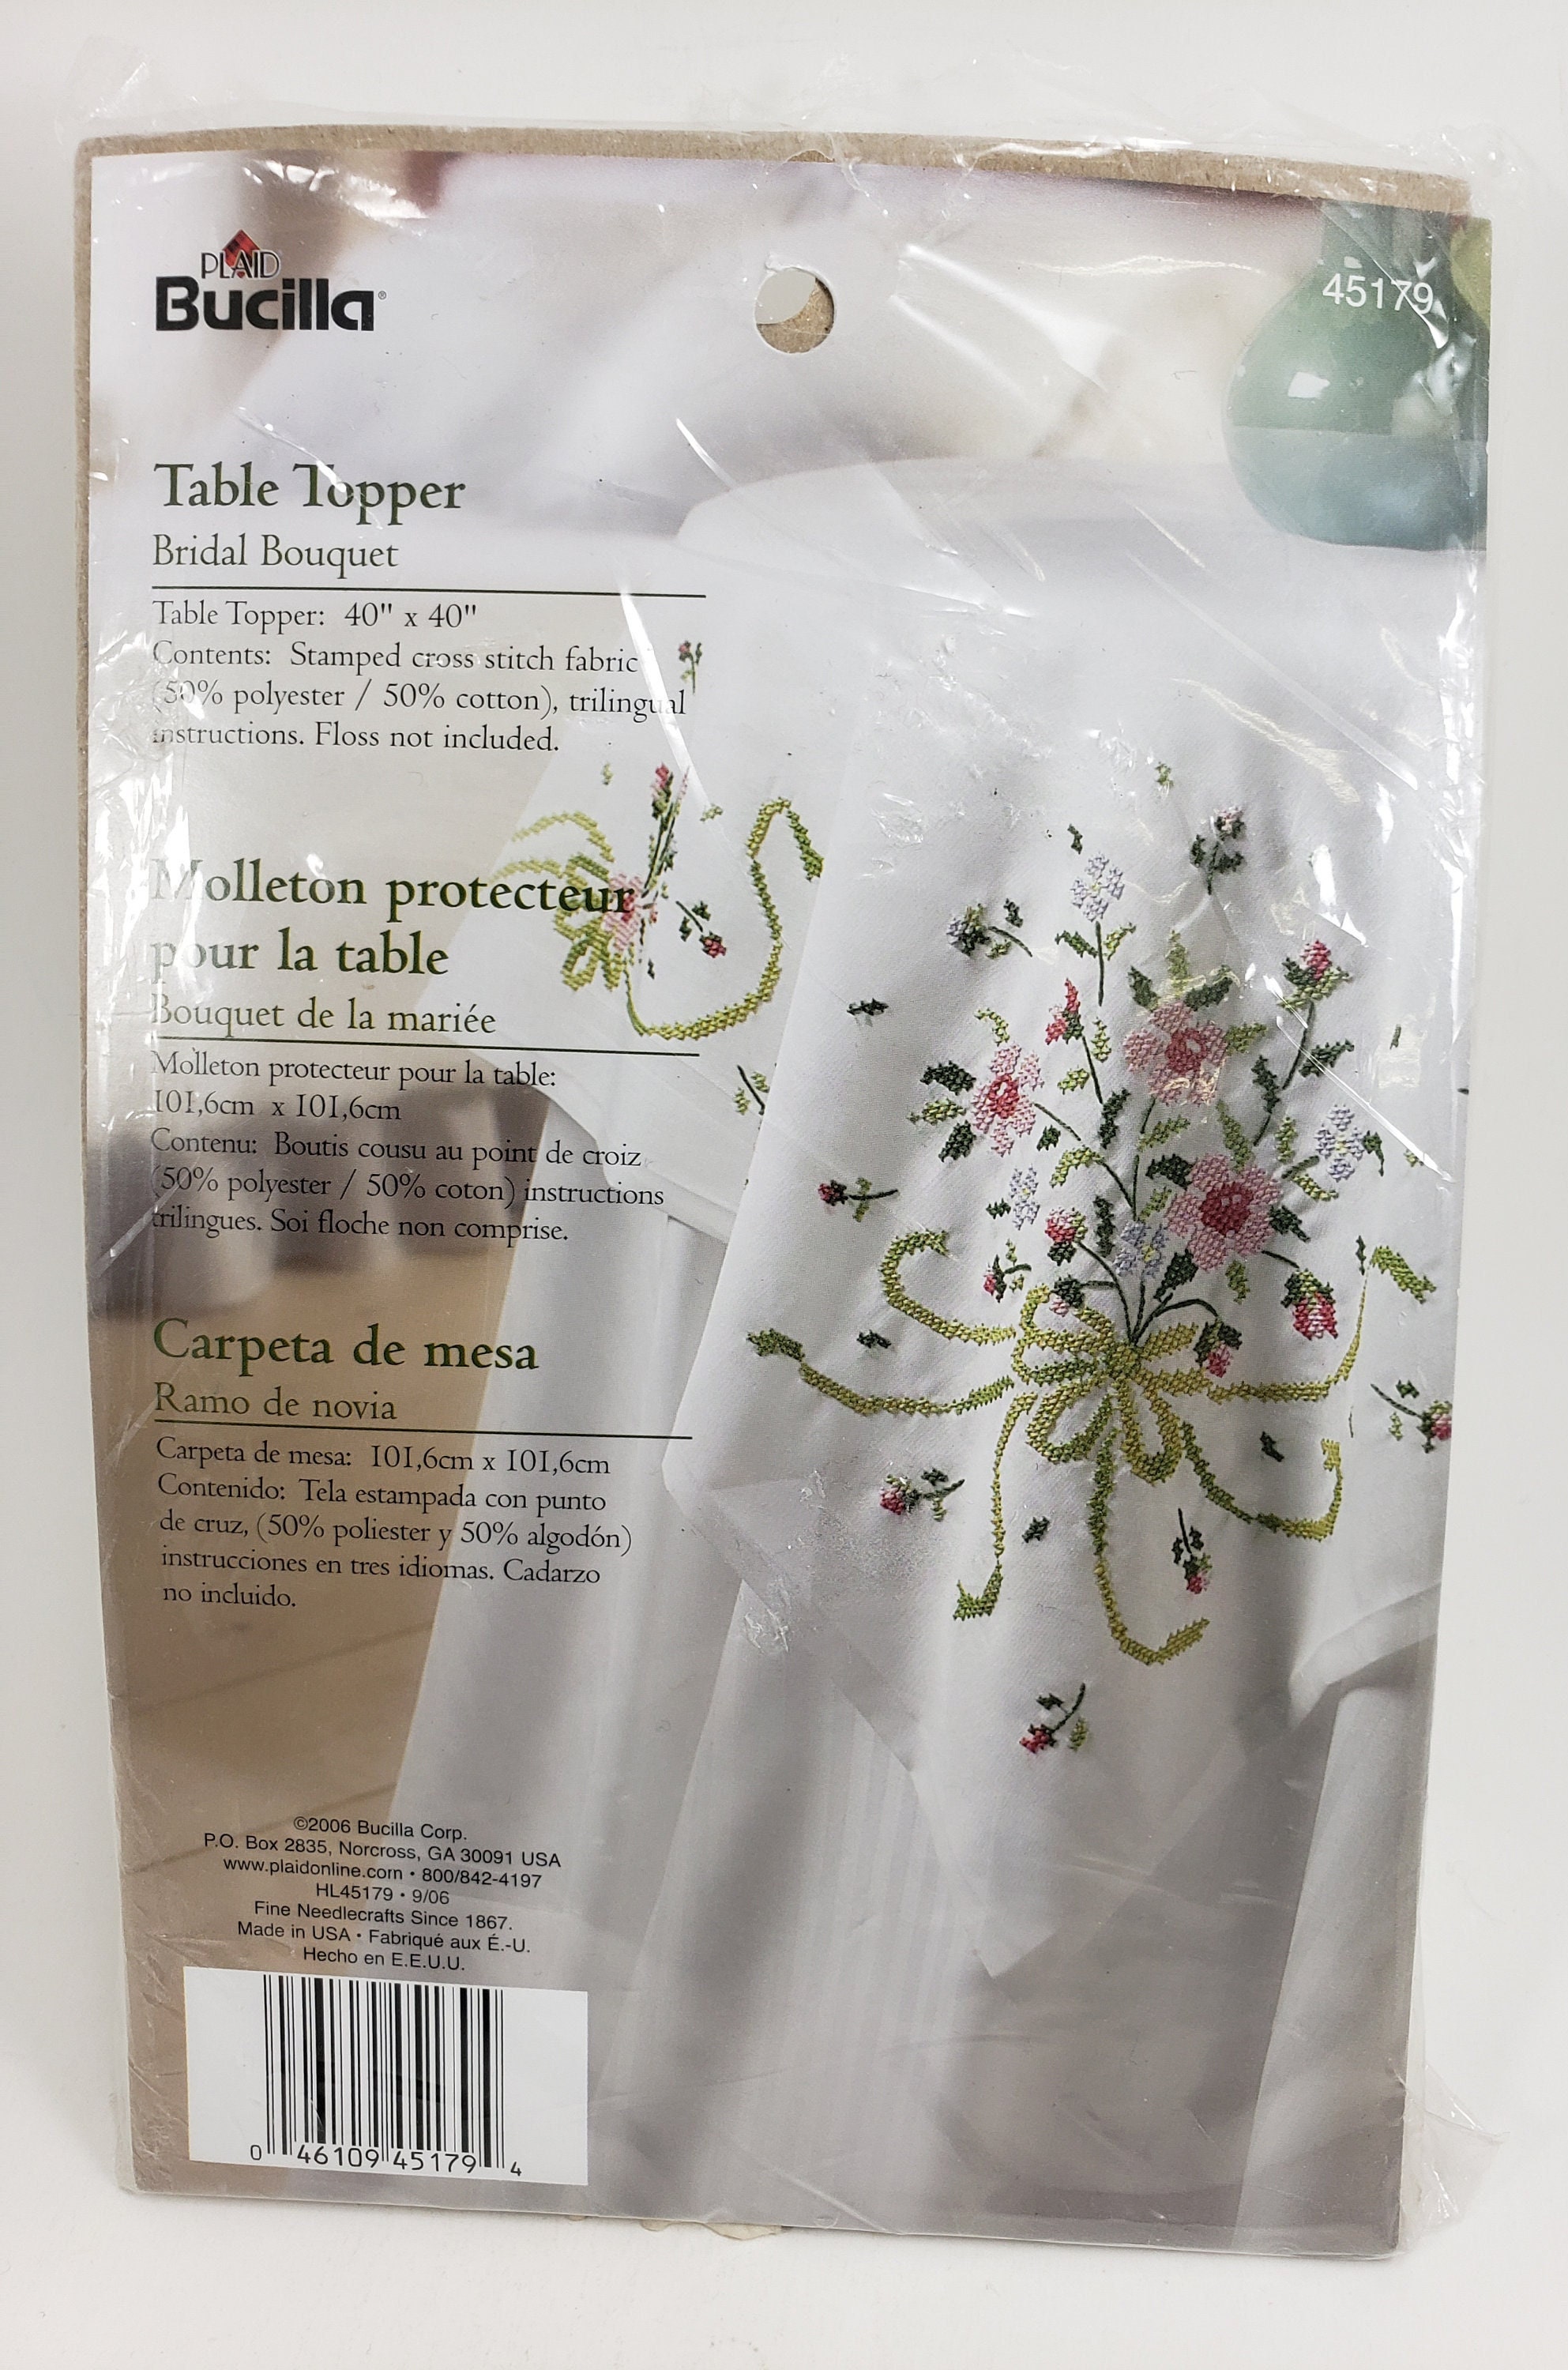 Bucilla Stamped Embroidery Kit 6 Round-Cherry Blossom Birdie, 1 count -  Harris Teeter